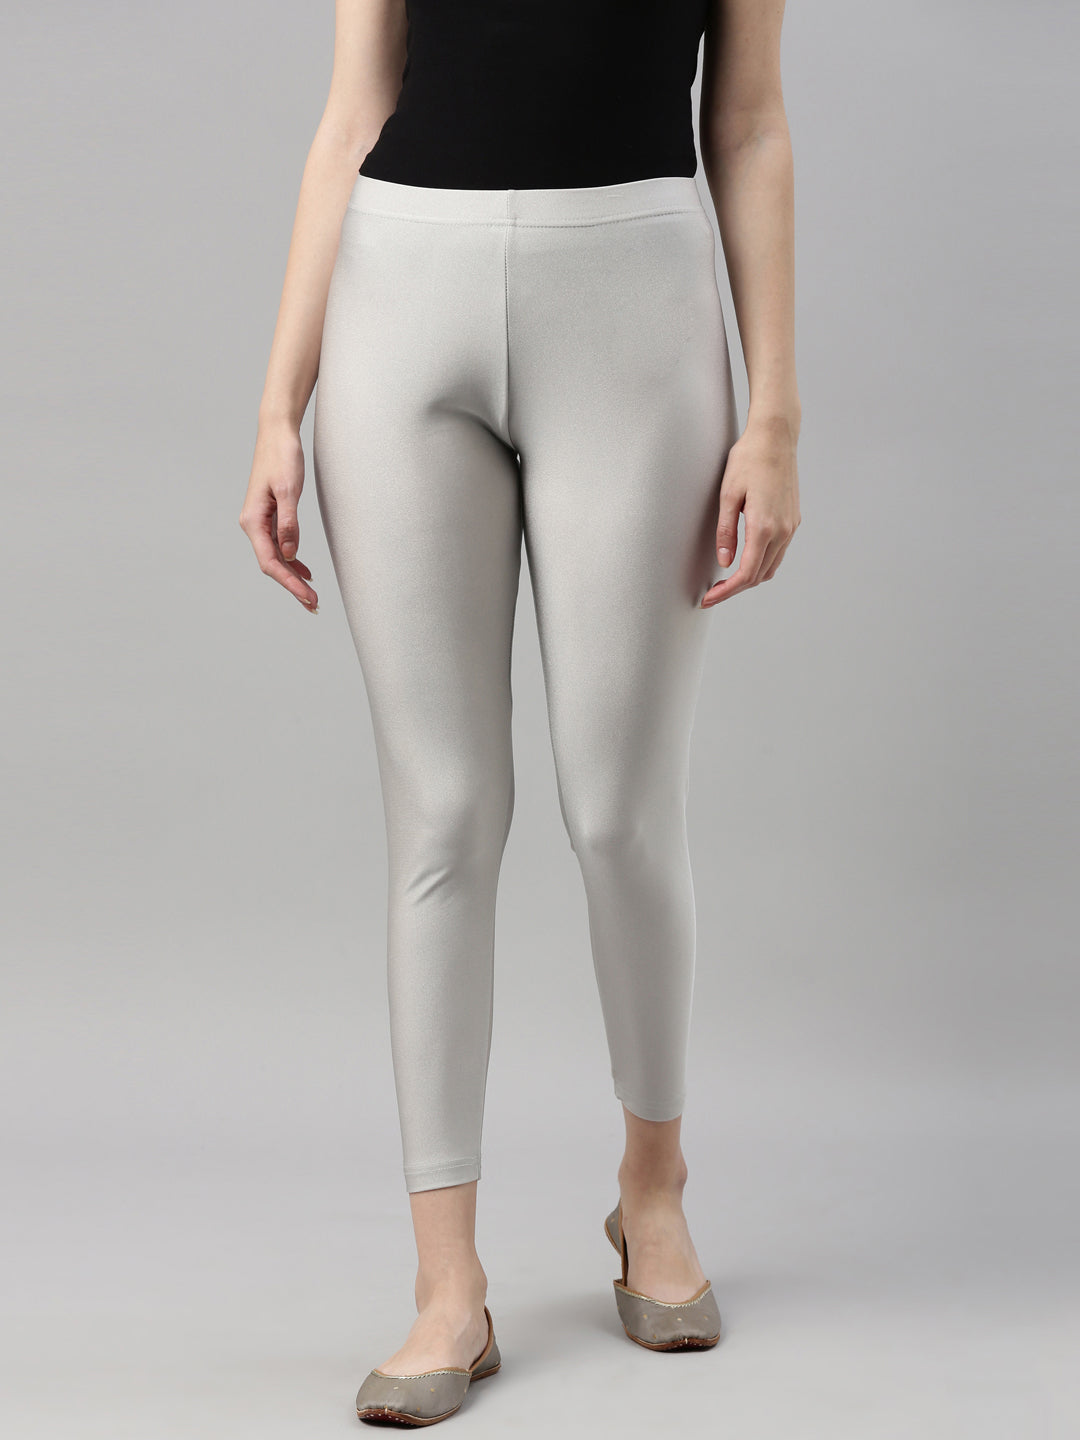 Buy Go Colors Women Silver Grey Viscose Shimmer Leggings online